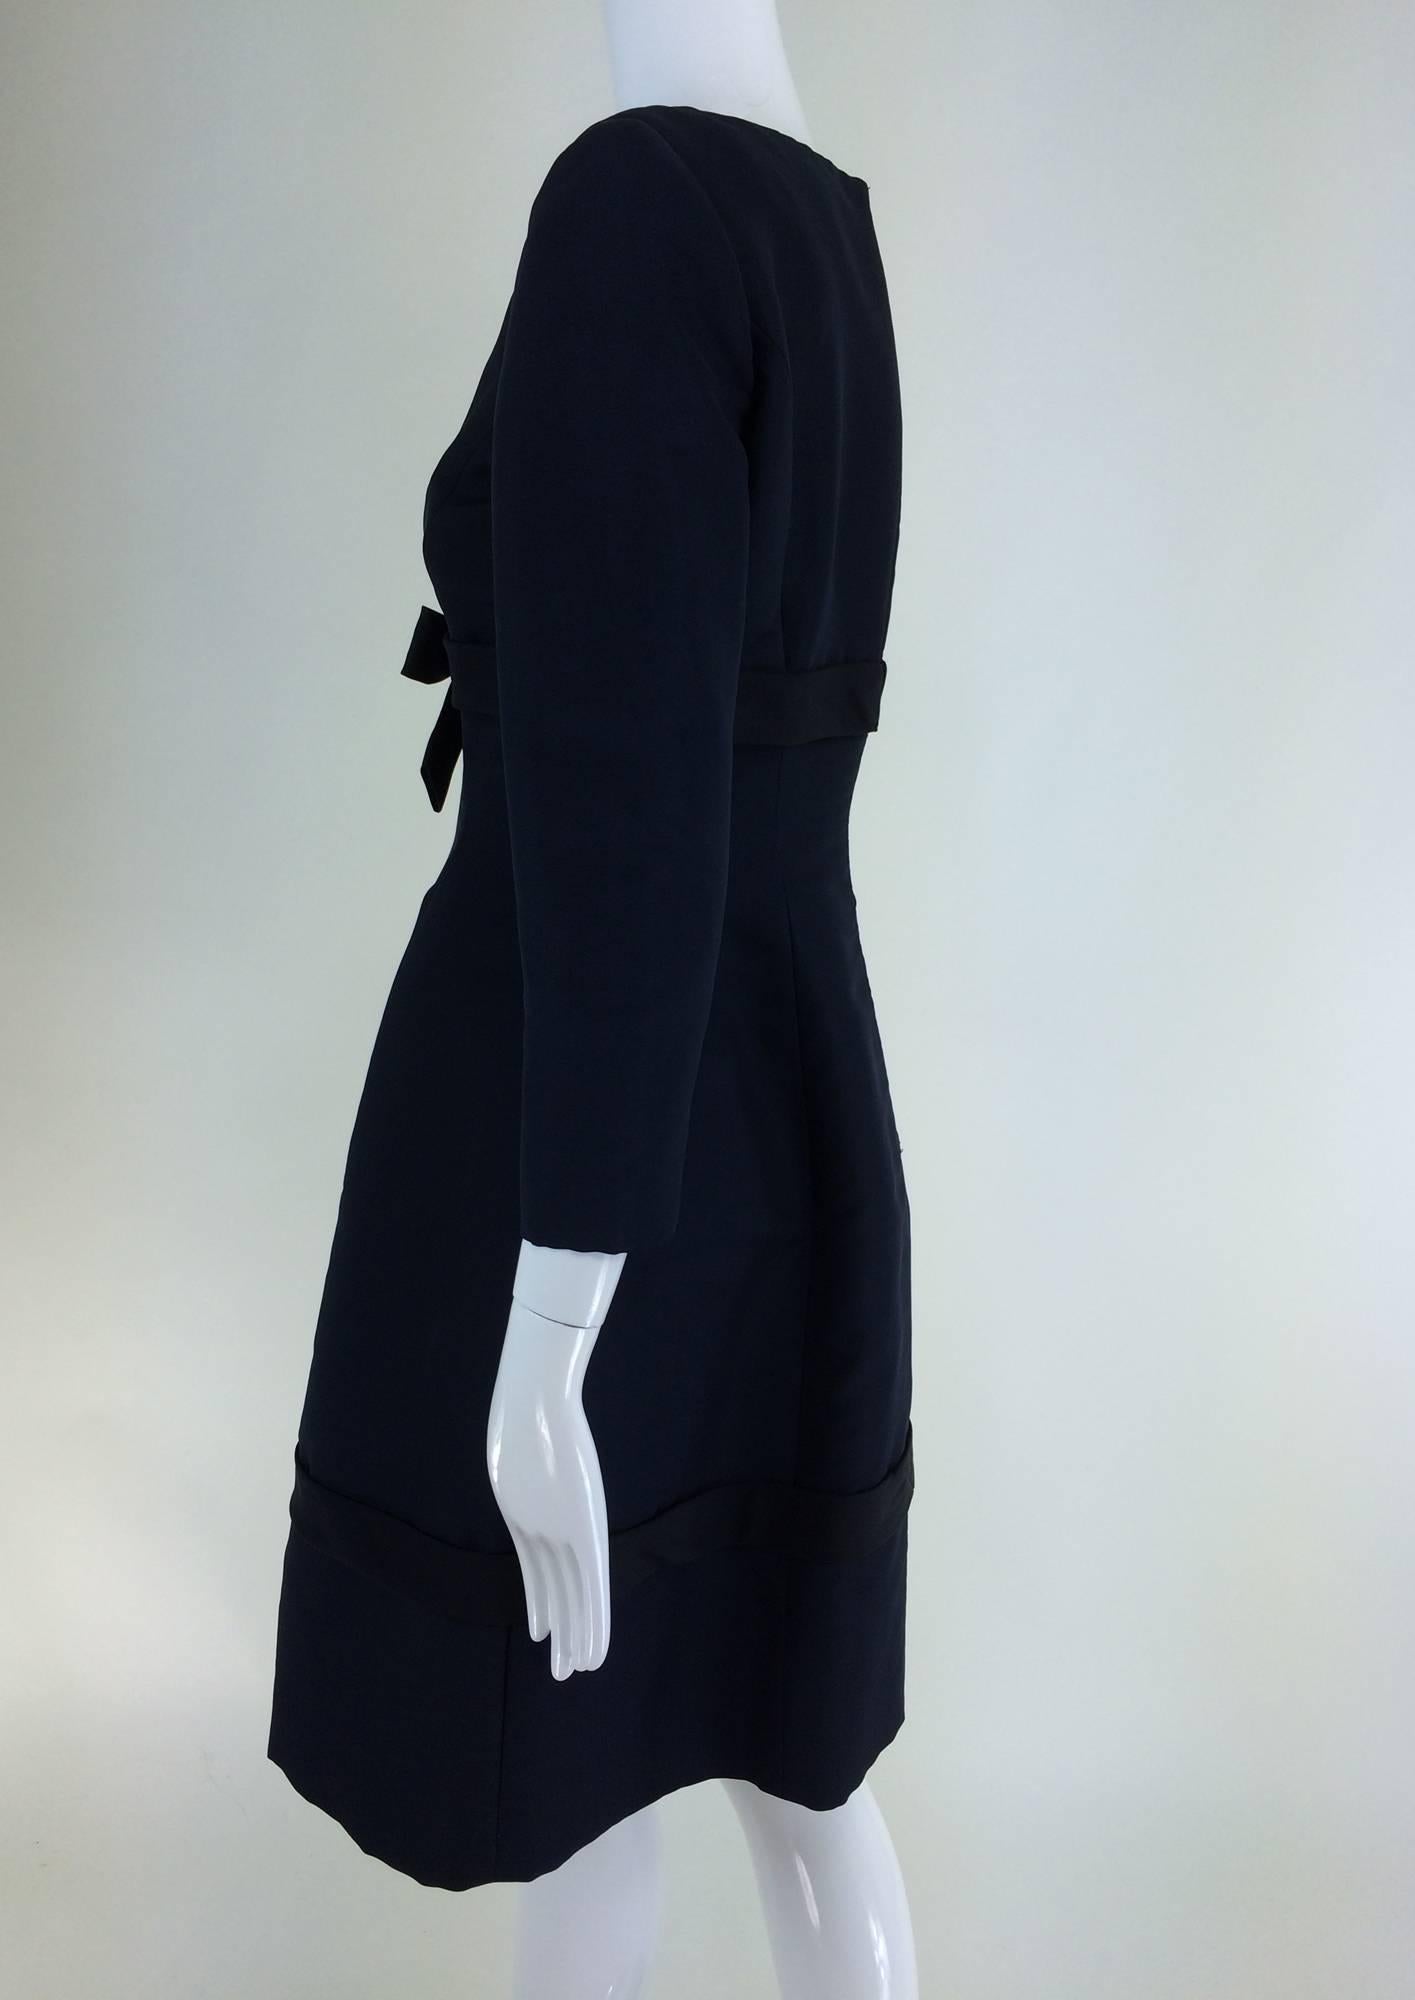 Oscar de la Renta classic navy blue silk bow front dress late 1960s 1